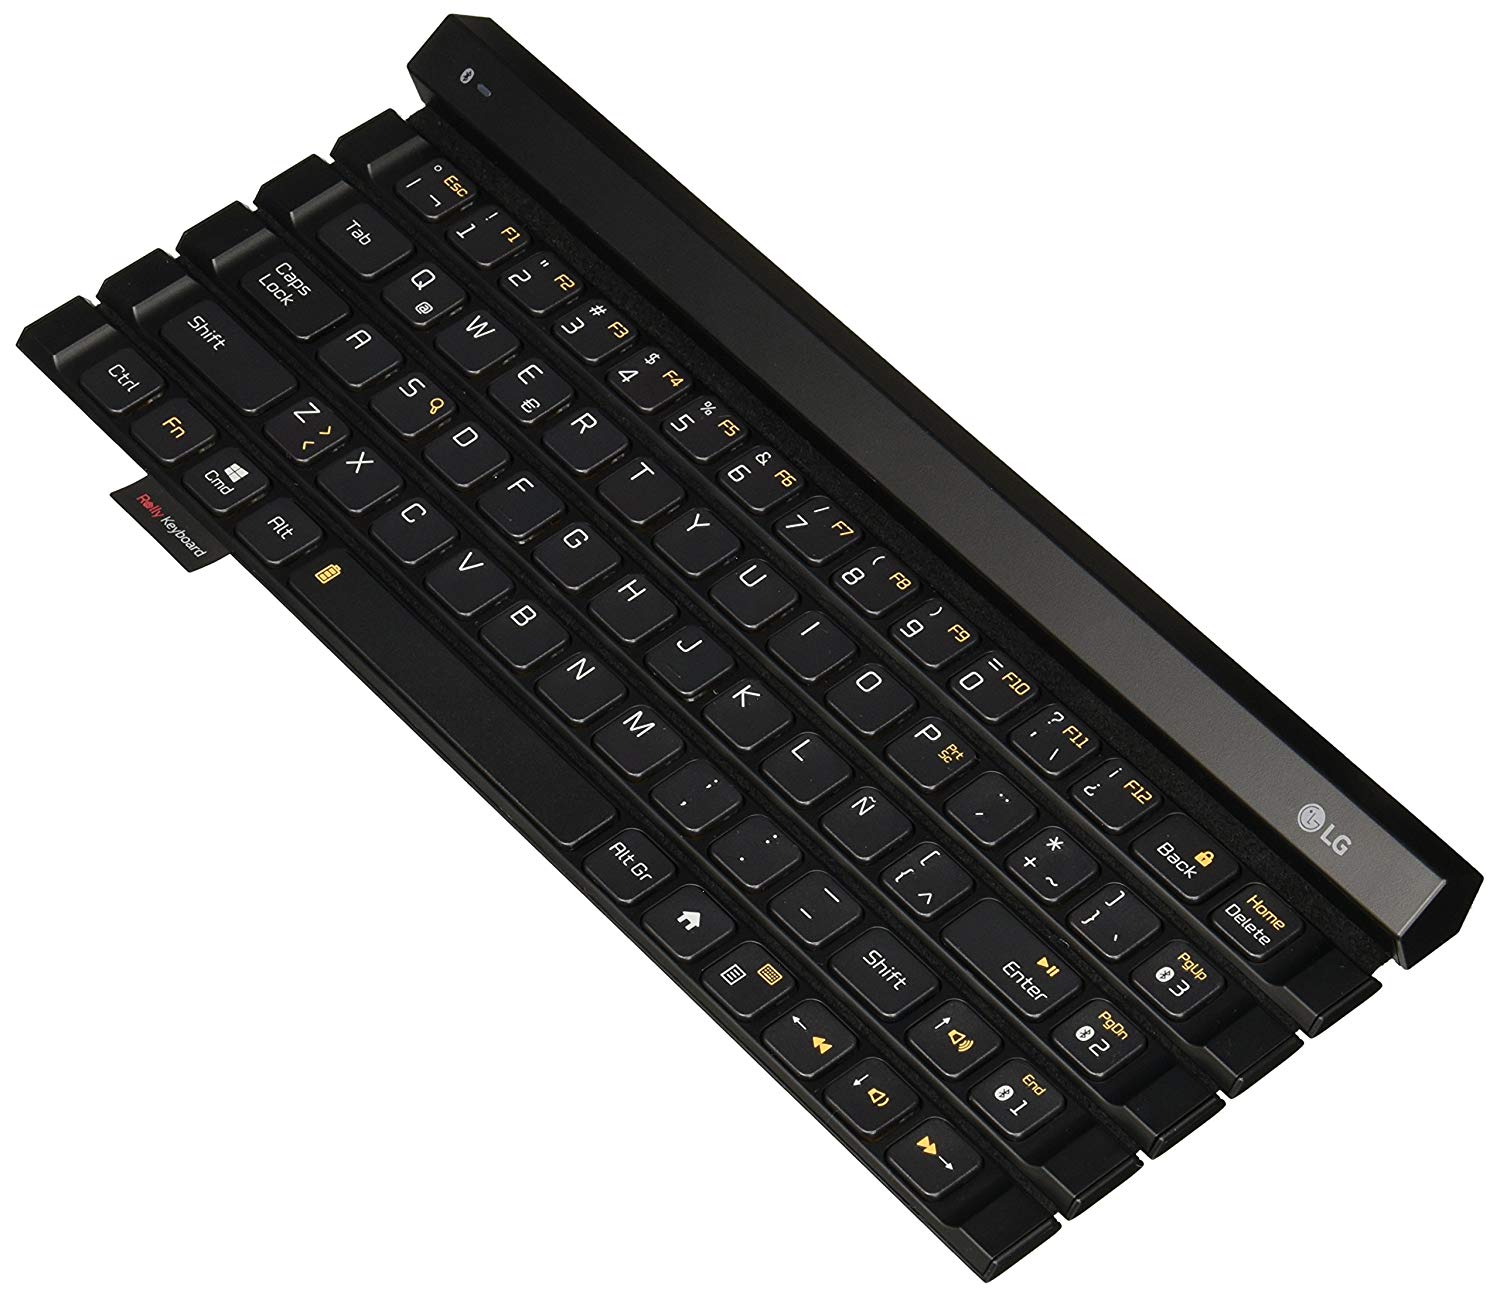 LG Rolly 2 Premium Portable Wireless Bluetooth Keyboard - Black (Certified Refurbished)